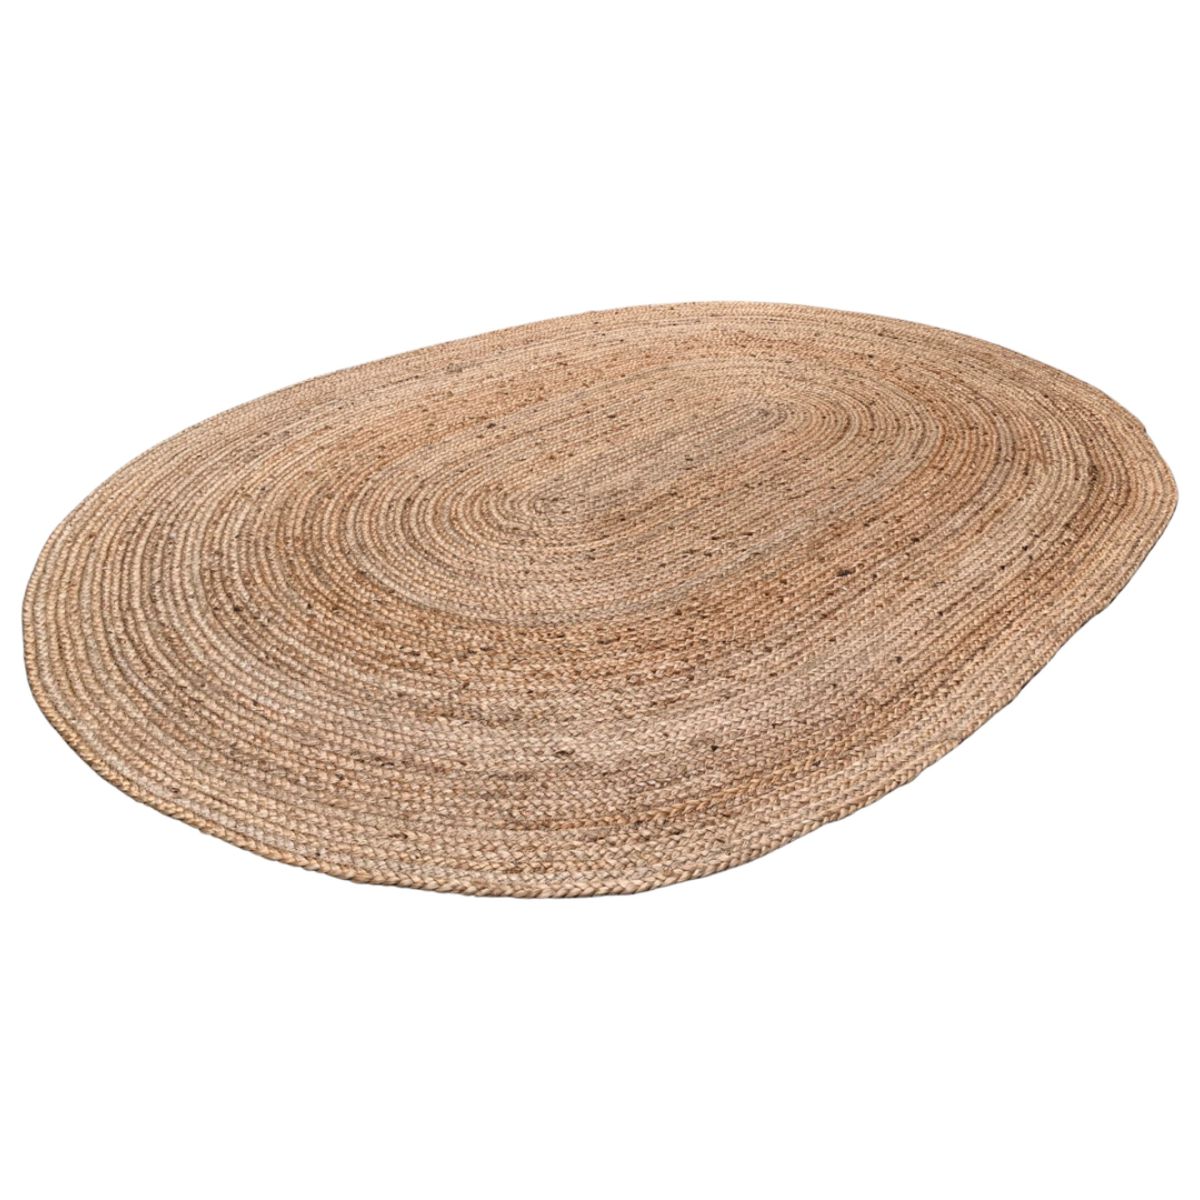 rug jute oval 200x300cm natural brown